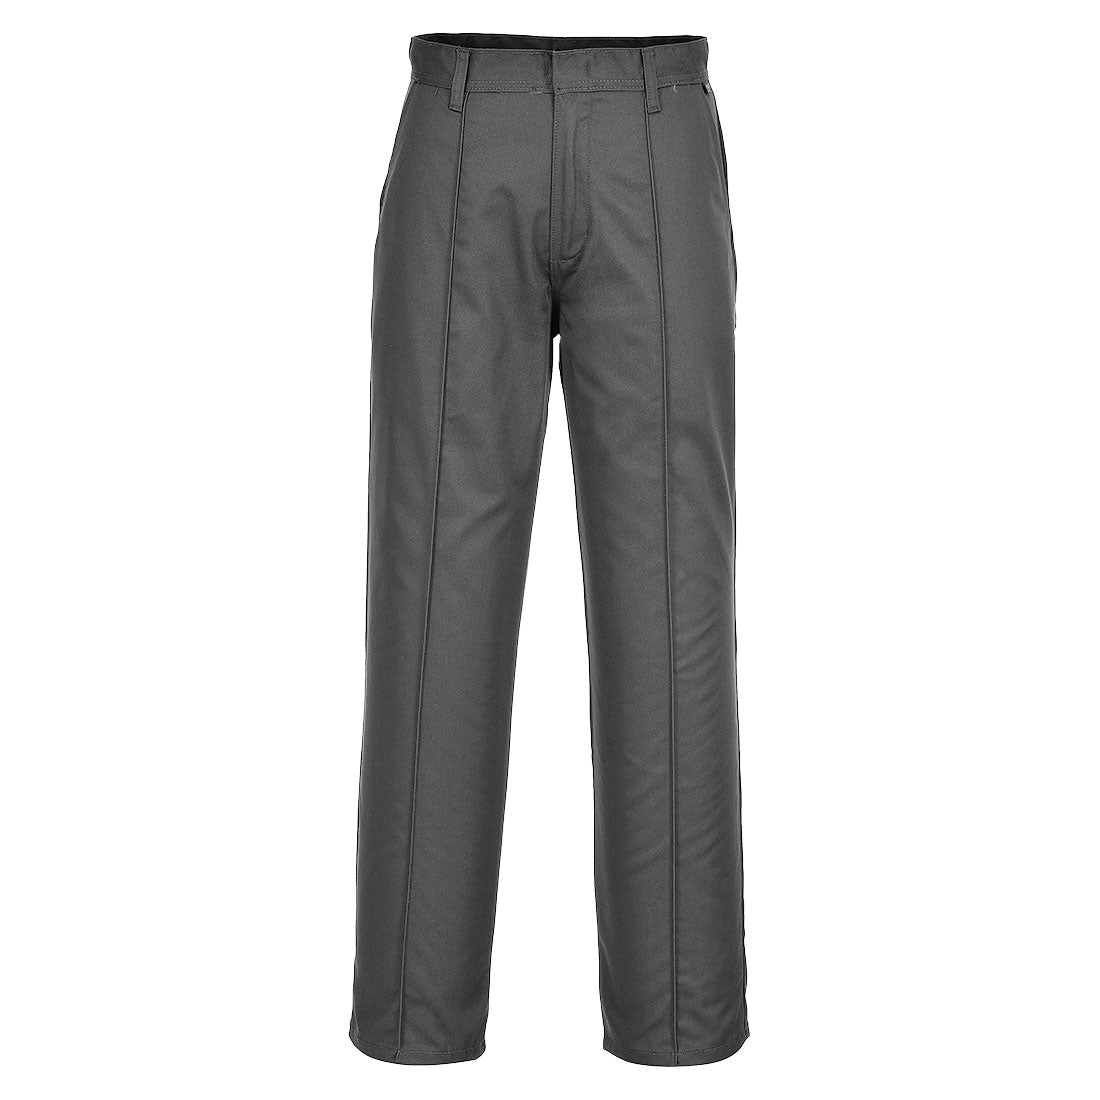 Portwest 2885 - Graphite Grey Preston Mens Work Trousers with Side Pockets sz 34" Regular